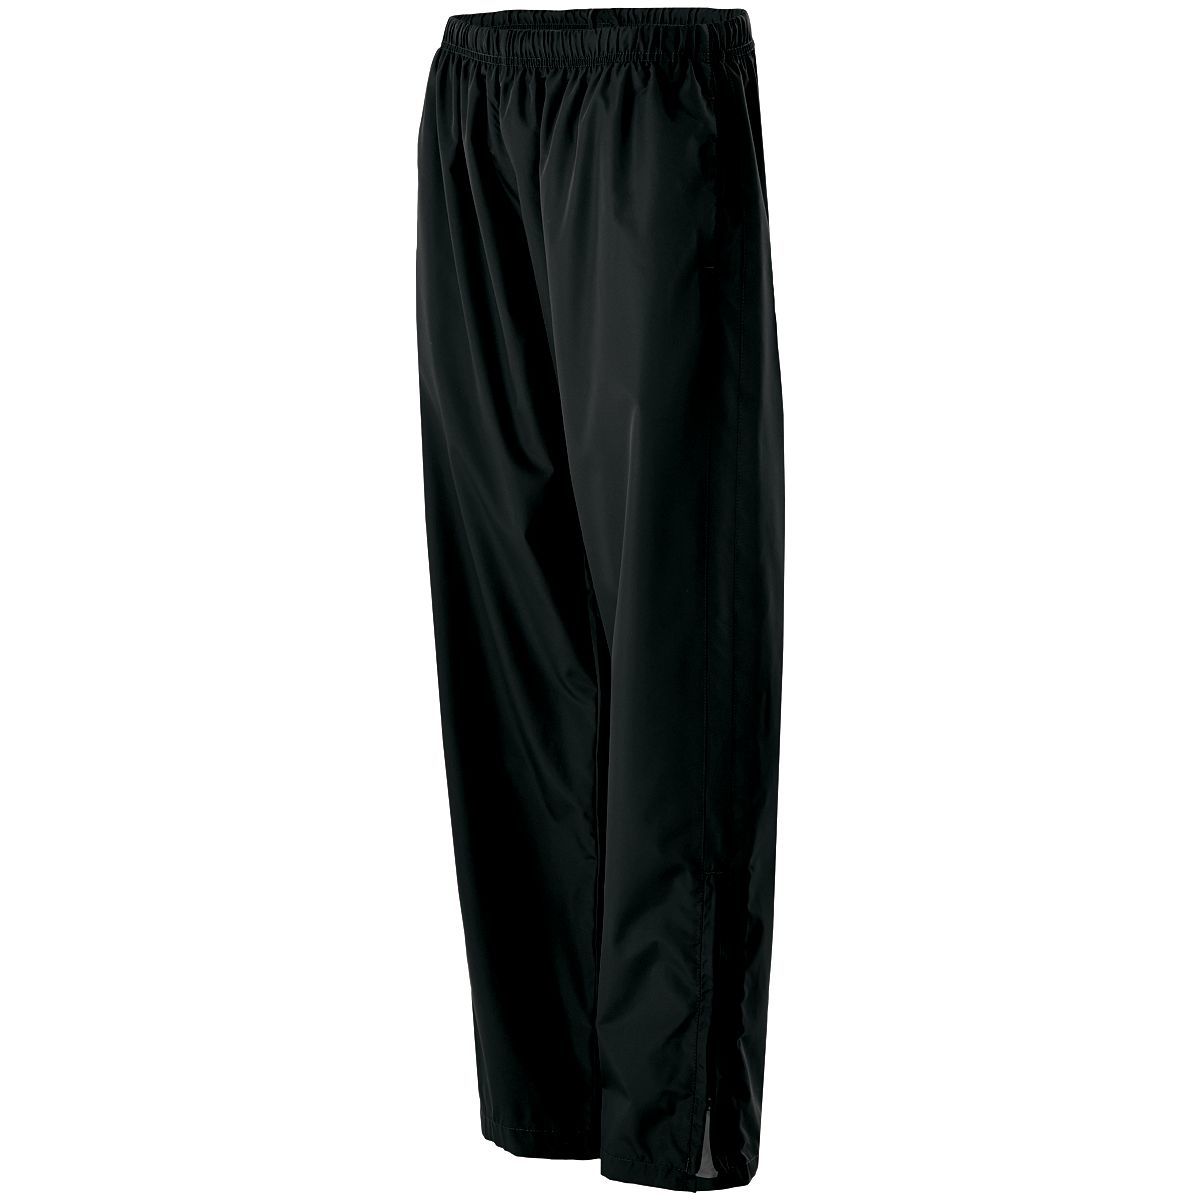 Holloway Ladies Sable Pant in Black/Black  -Part of the Ladies, Ladies-Pants, Pants, Holloway product lines at KanaleyCreations.com